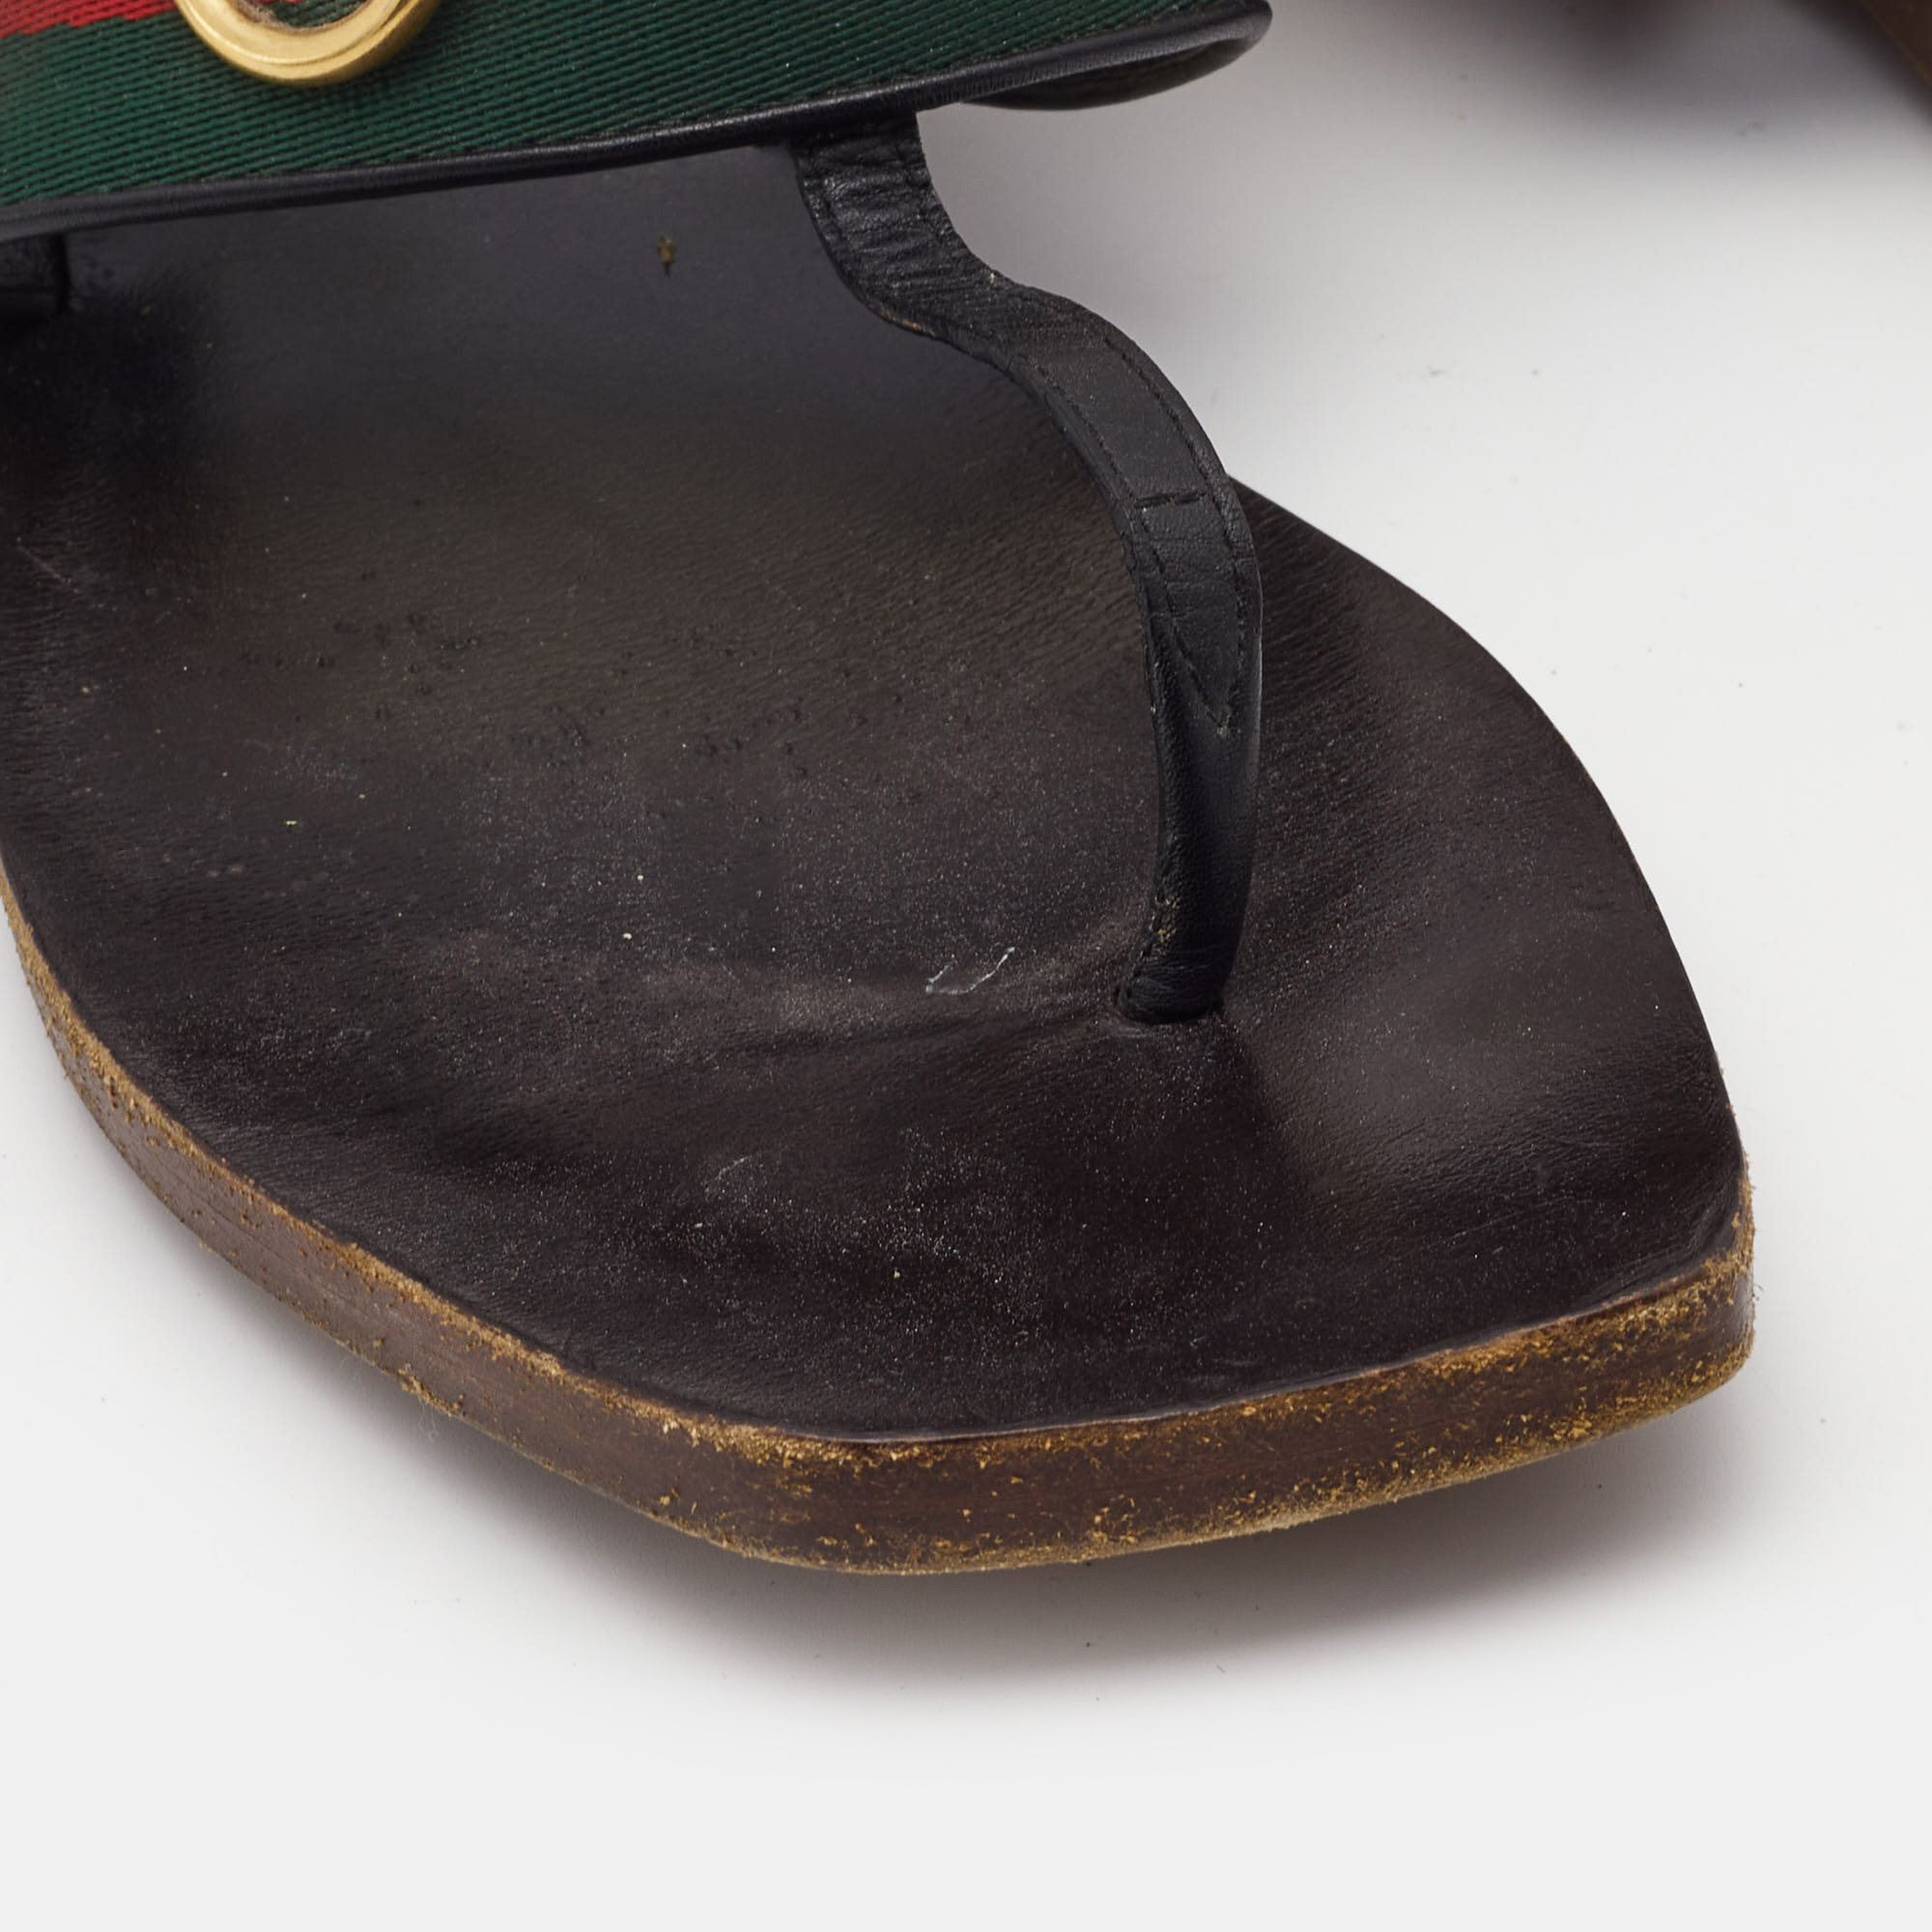 Gucci Black Leather Web Slingback Sandals Size 37.5